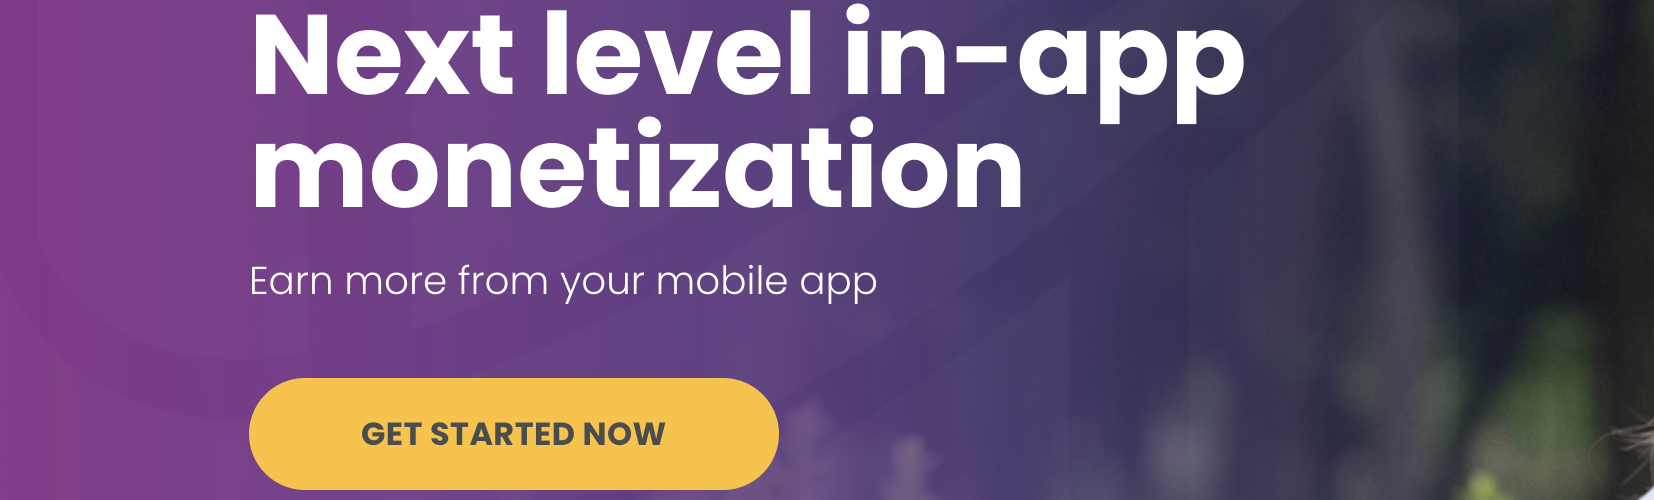 mobile-app-monetization-make-more-money